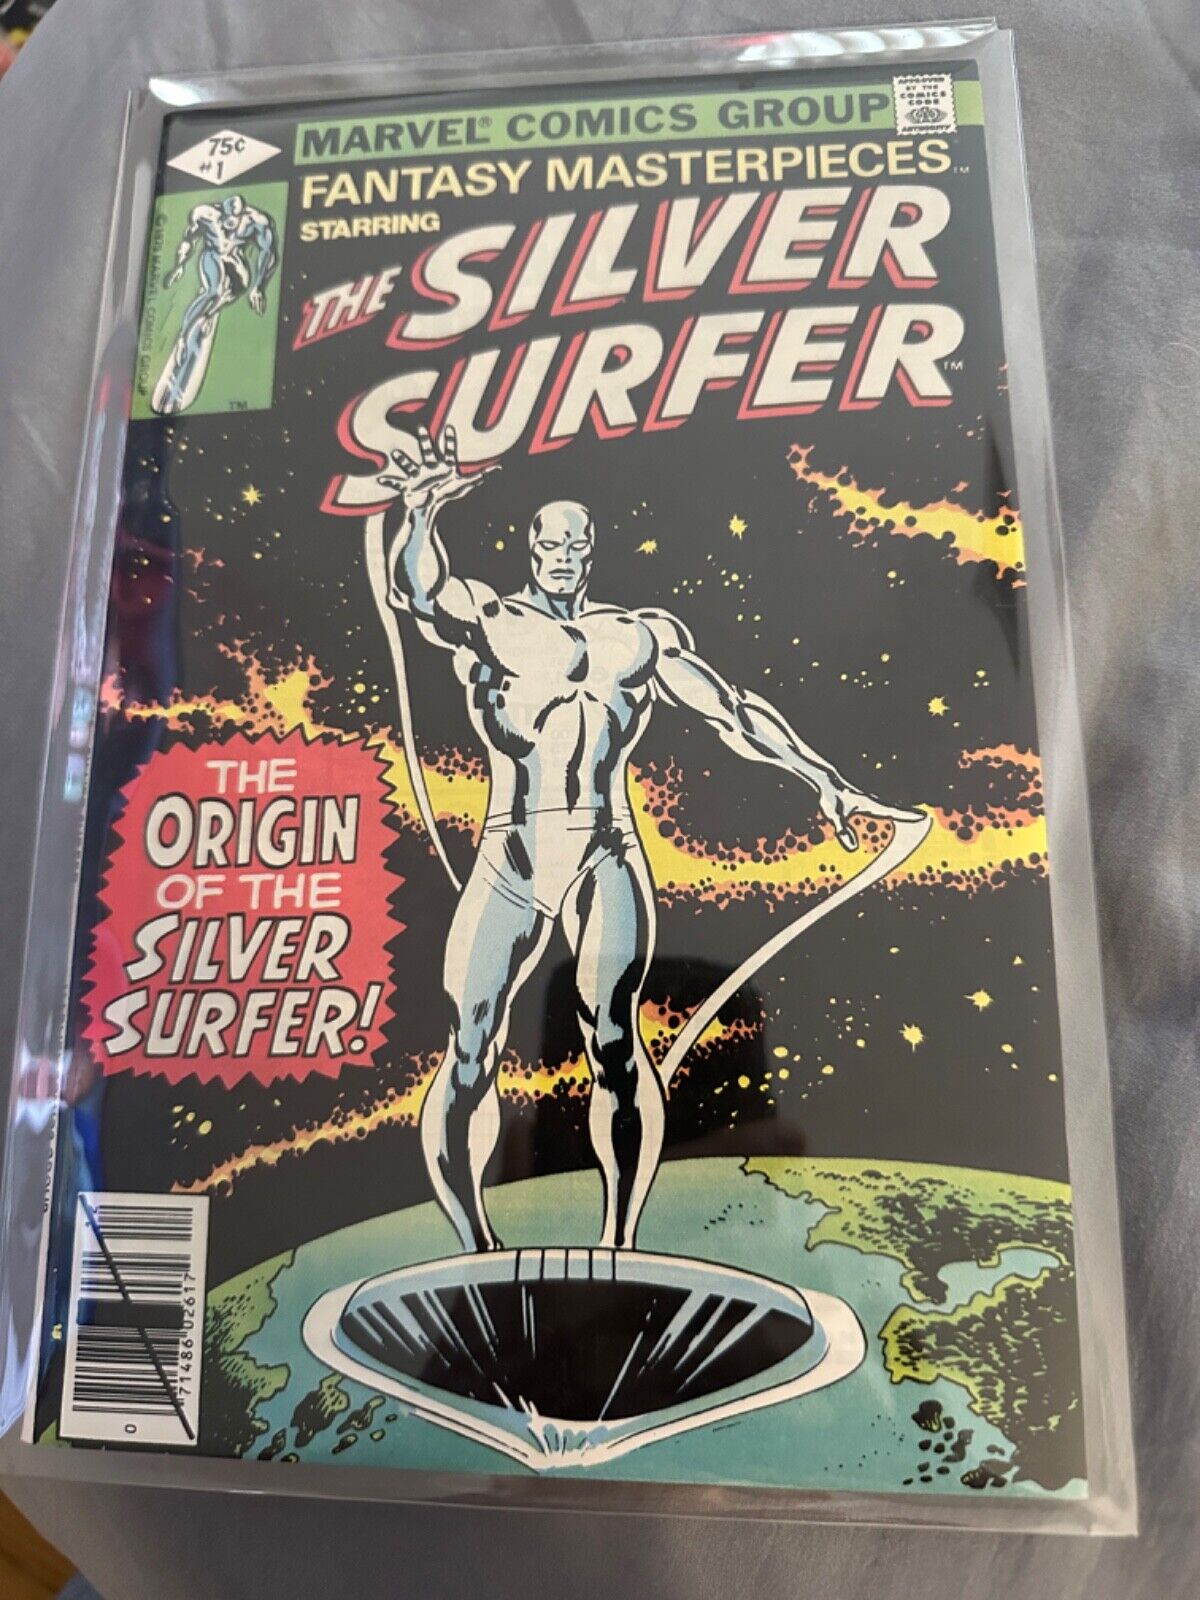 Silver Surfer #1 Fantasy Masterpieces Marvel Comics 1979 - VF+